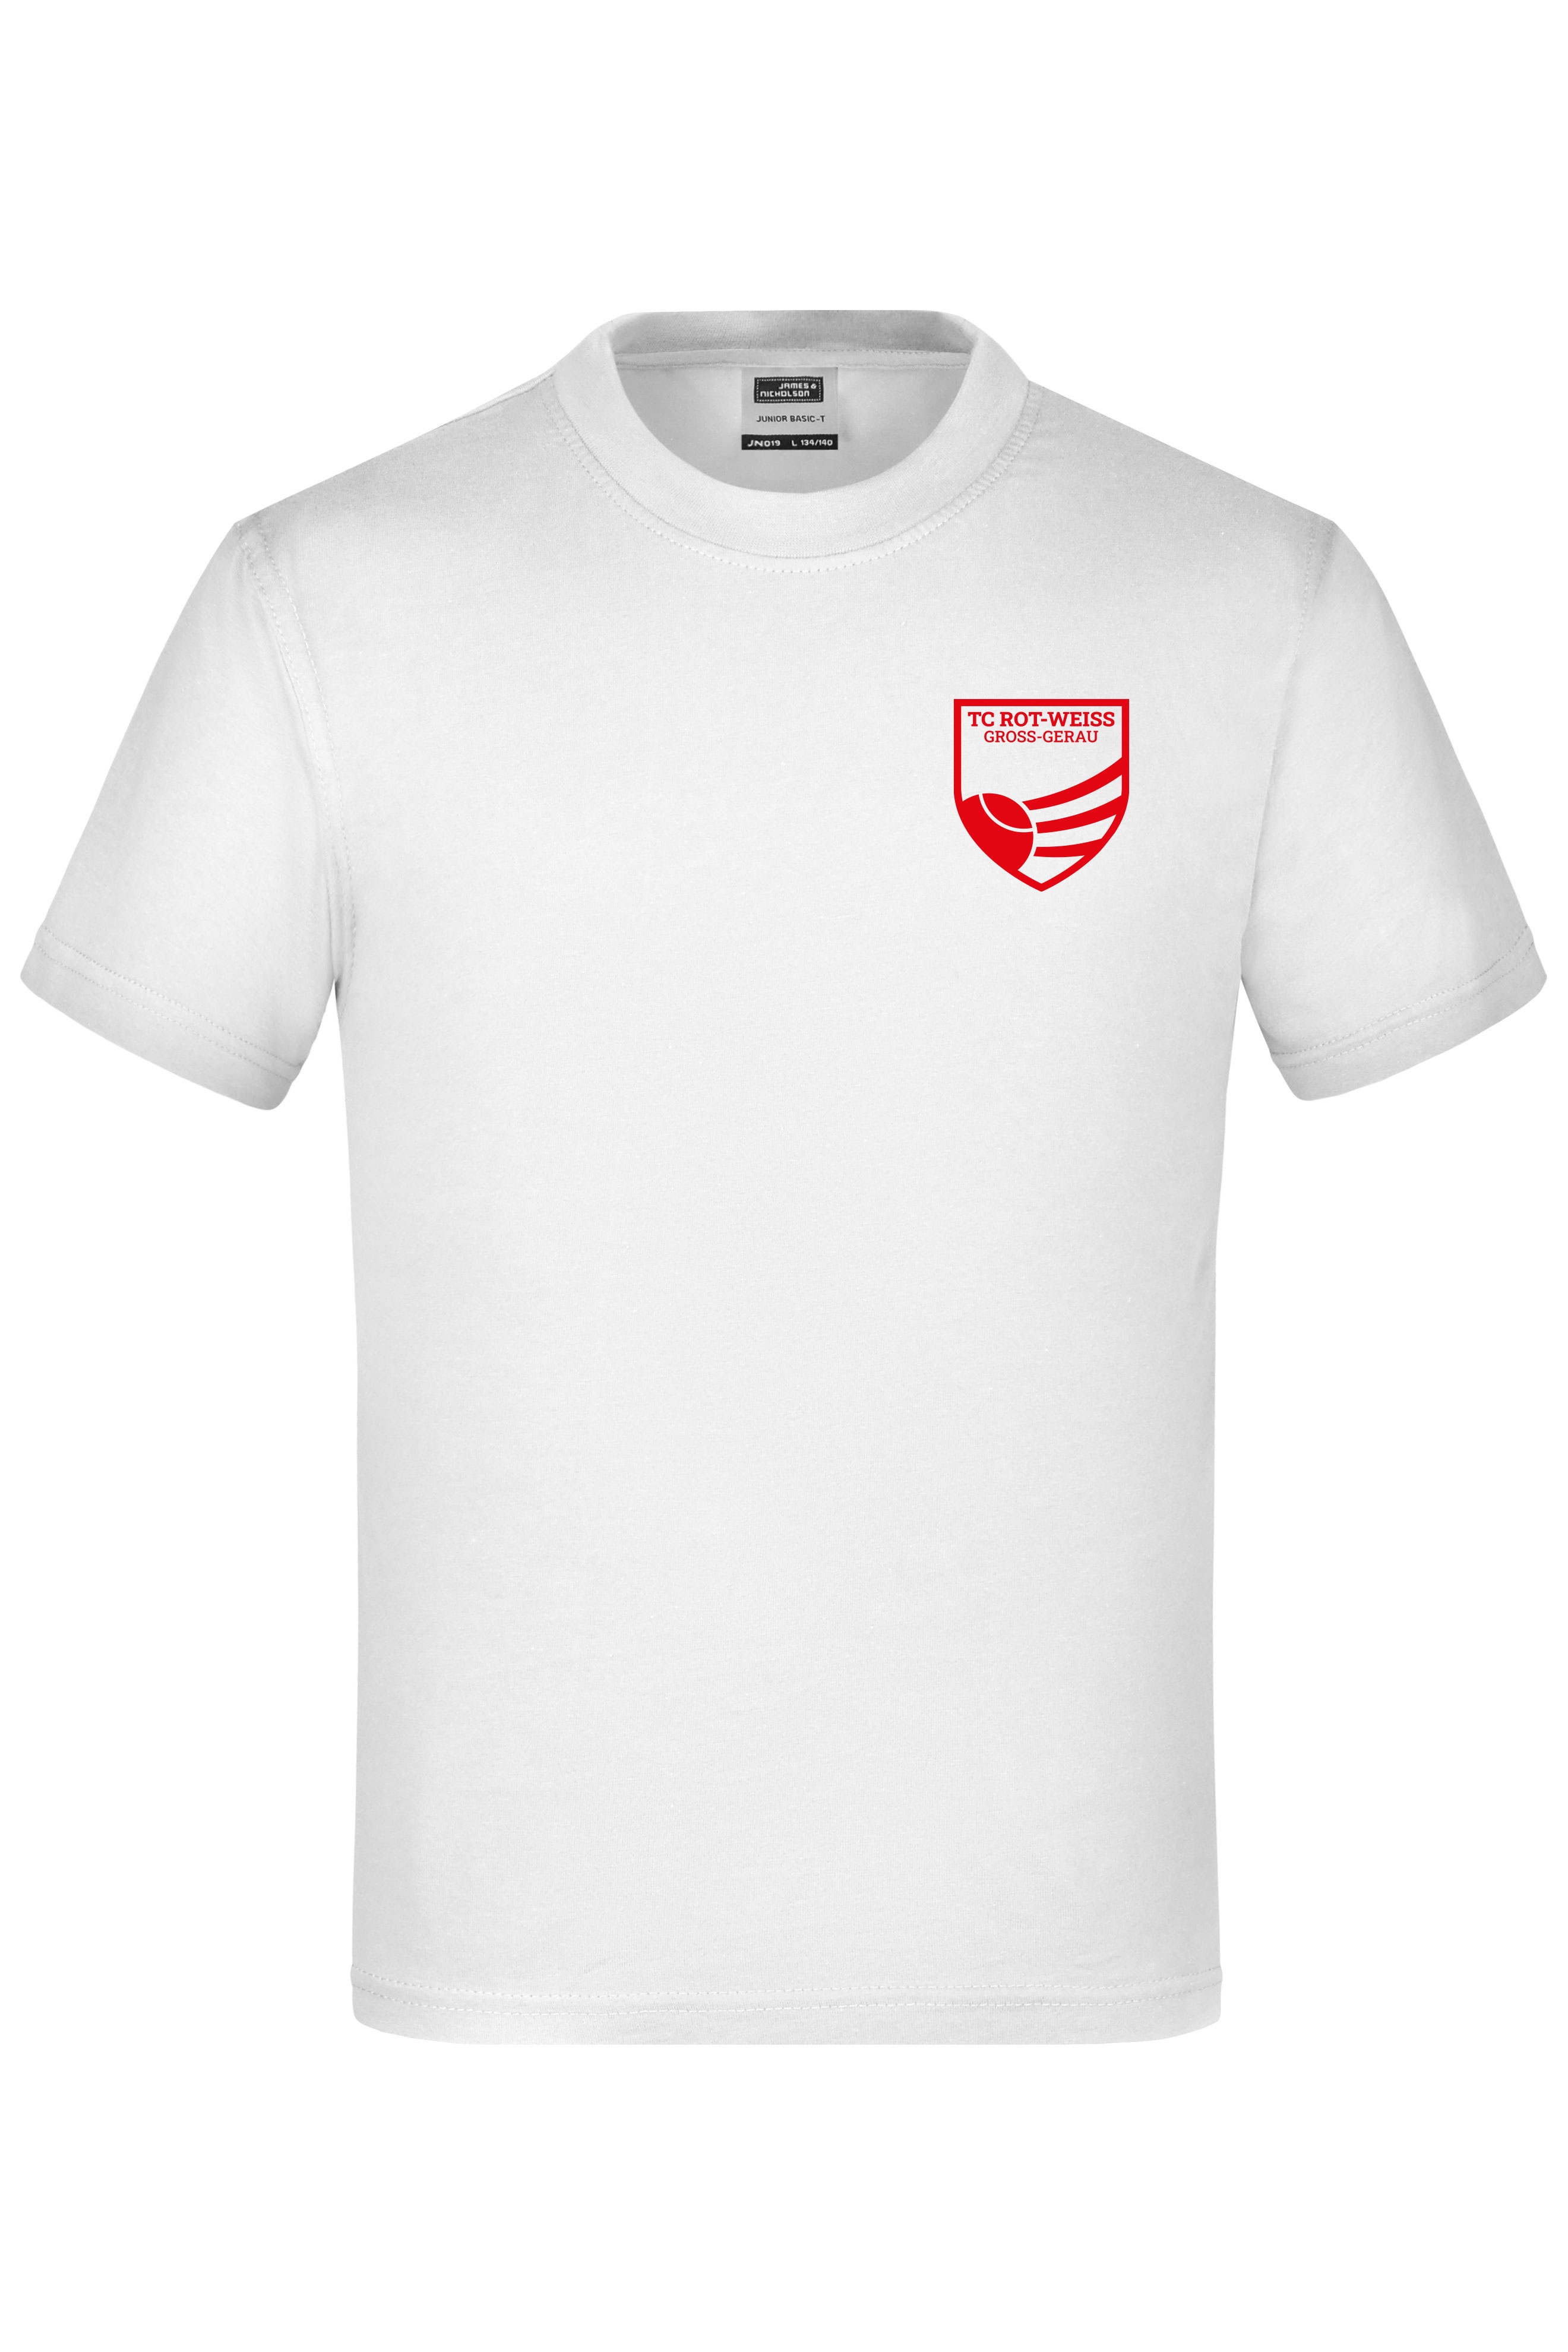 TC Rot-Weiss - Vorteil GG - Kinder T-Shirt 